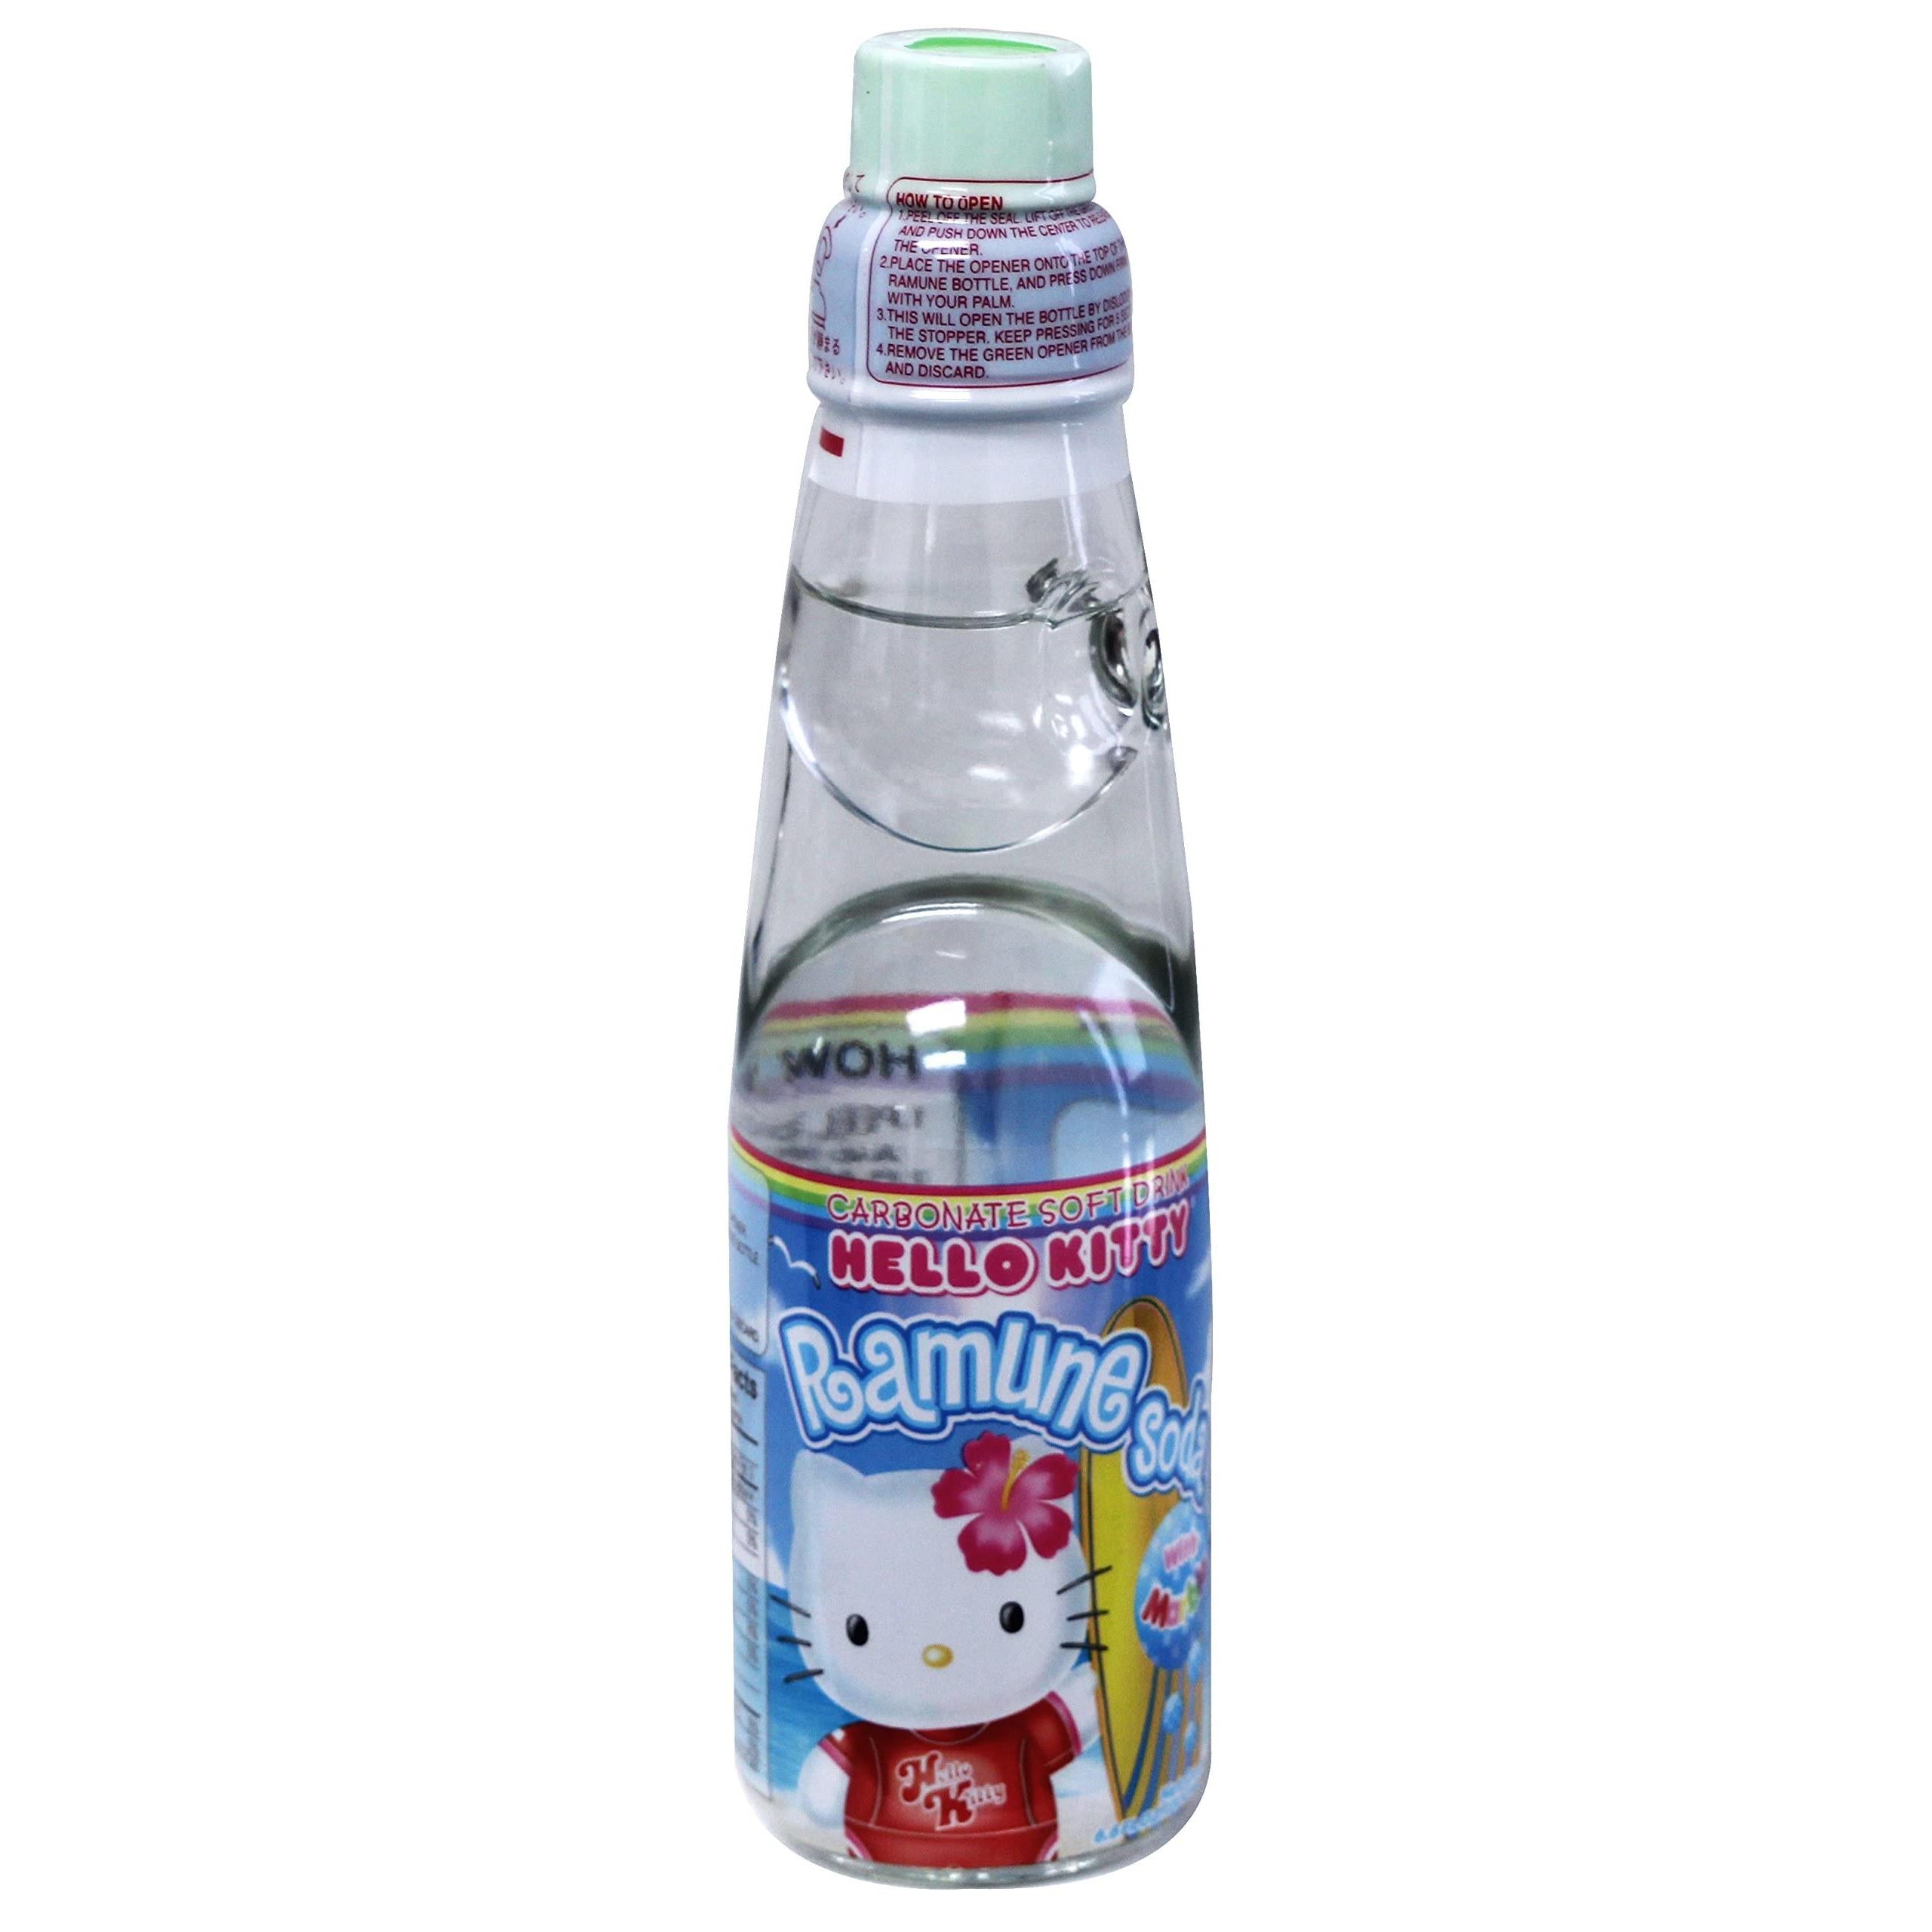 Hata Hello Kitty Ramune Soda 6.6 oz